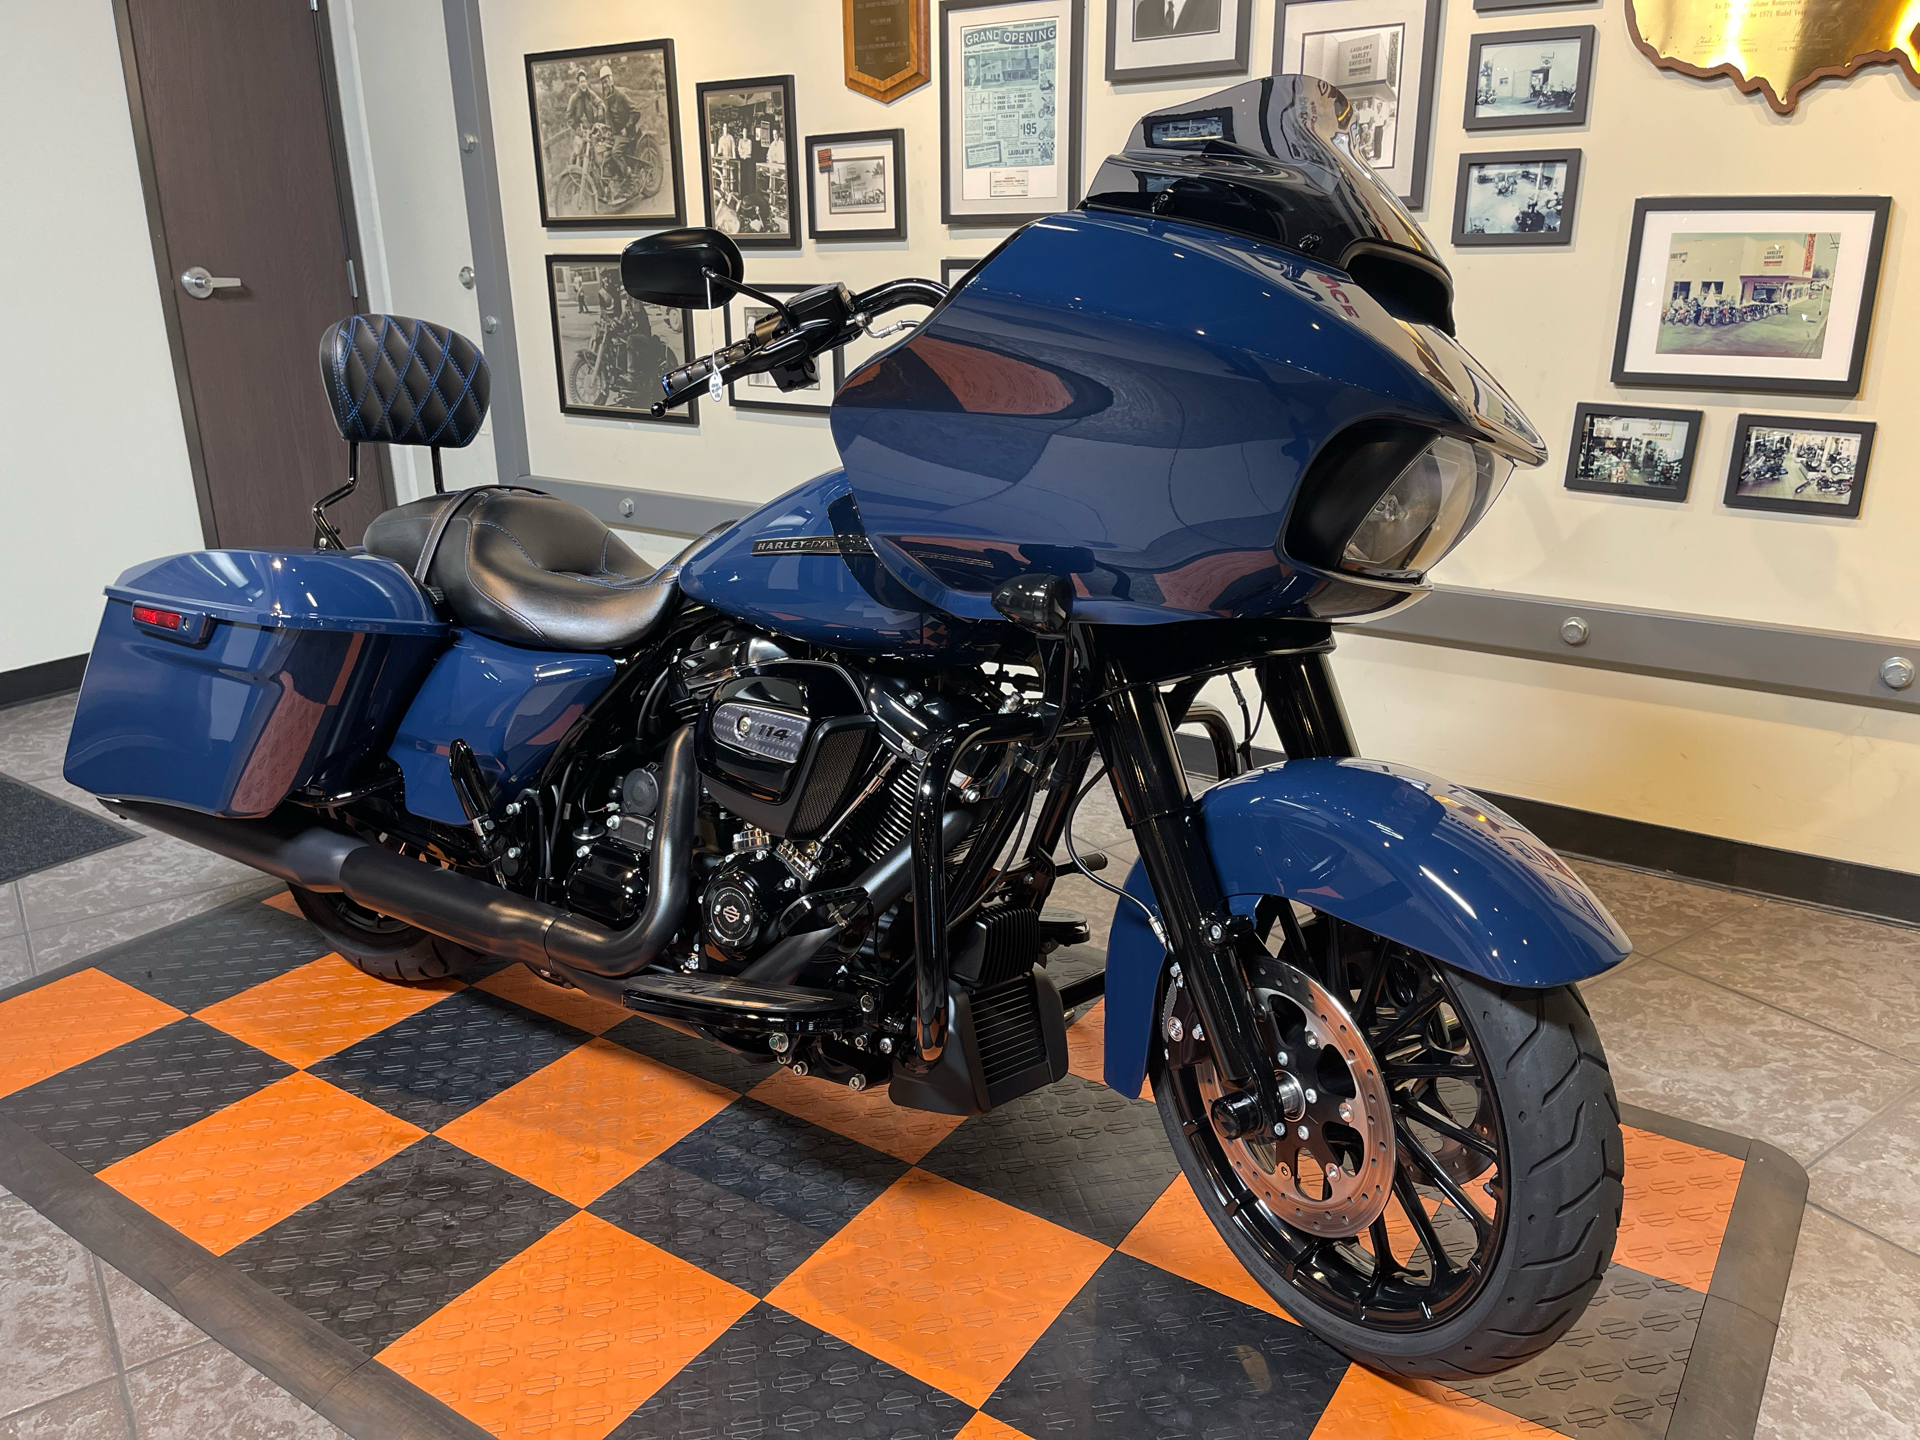 2019 Harley-Davidson Road Glide® Special in Baldwin Park, California - Photo 8